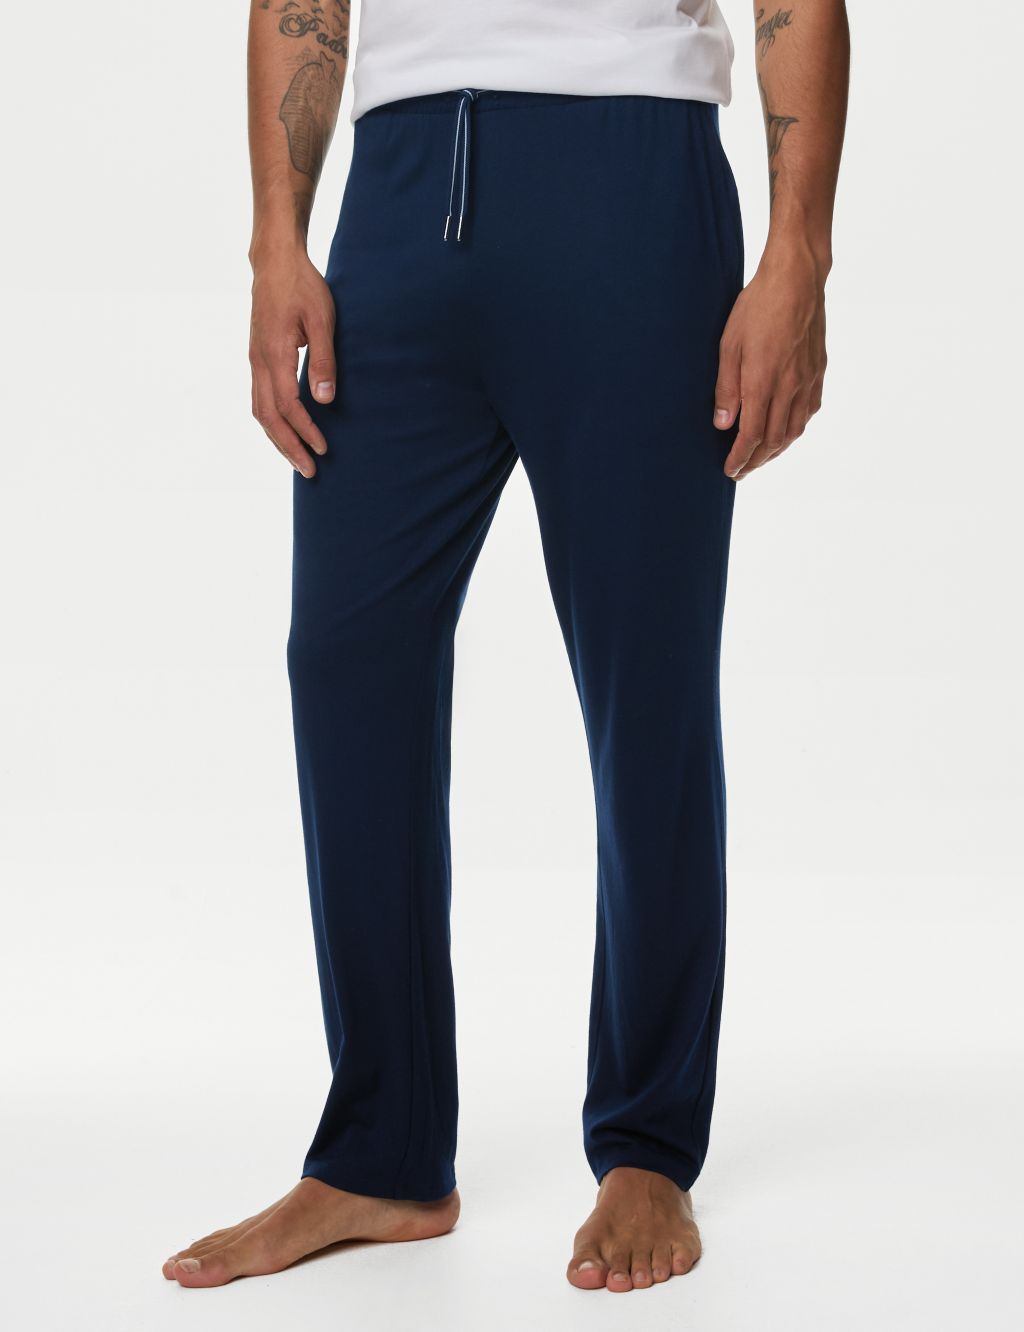 Marks & Spencer SLEEP LEGGING - Pyjama bottoms - navy/dark blue - Zalando.de